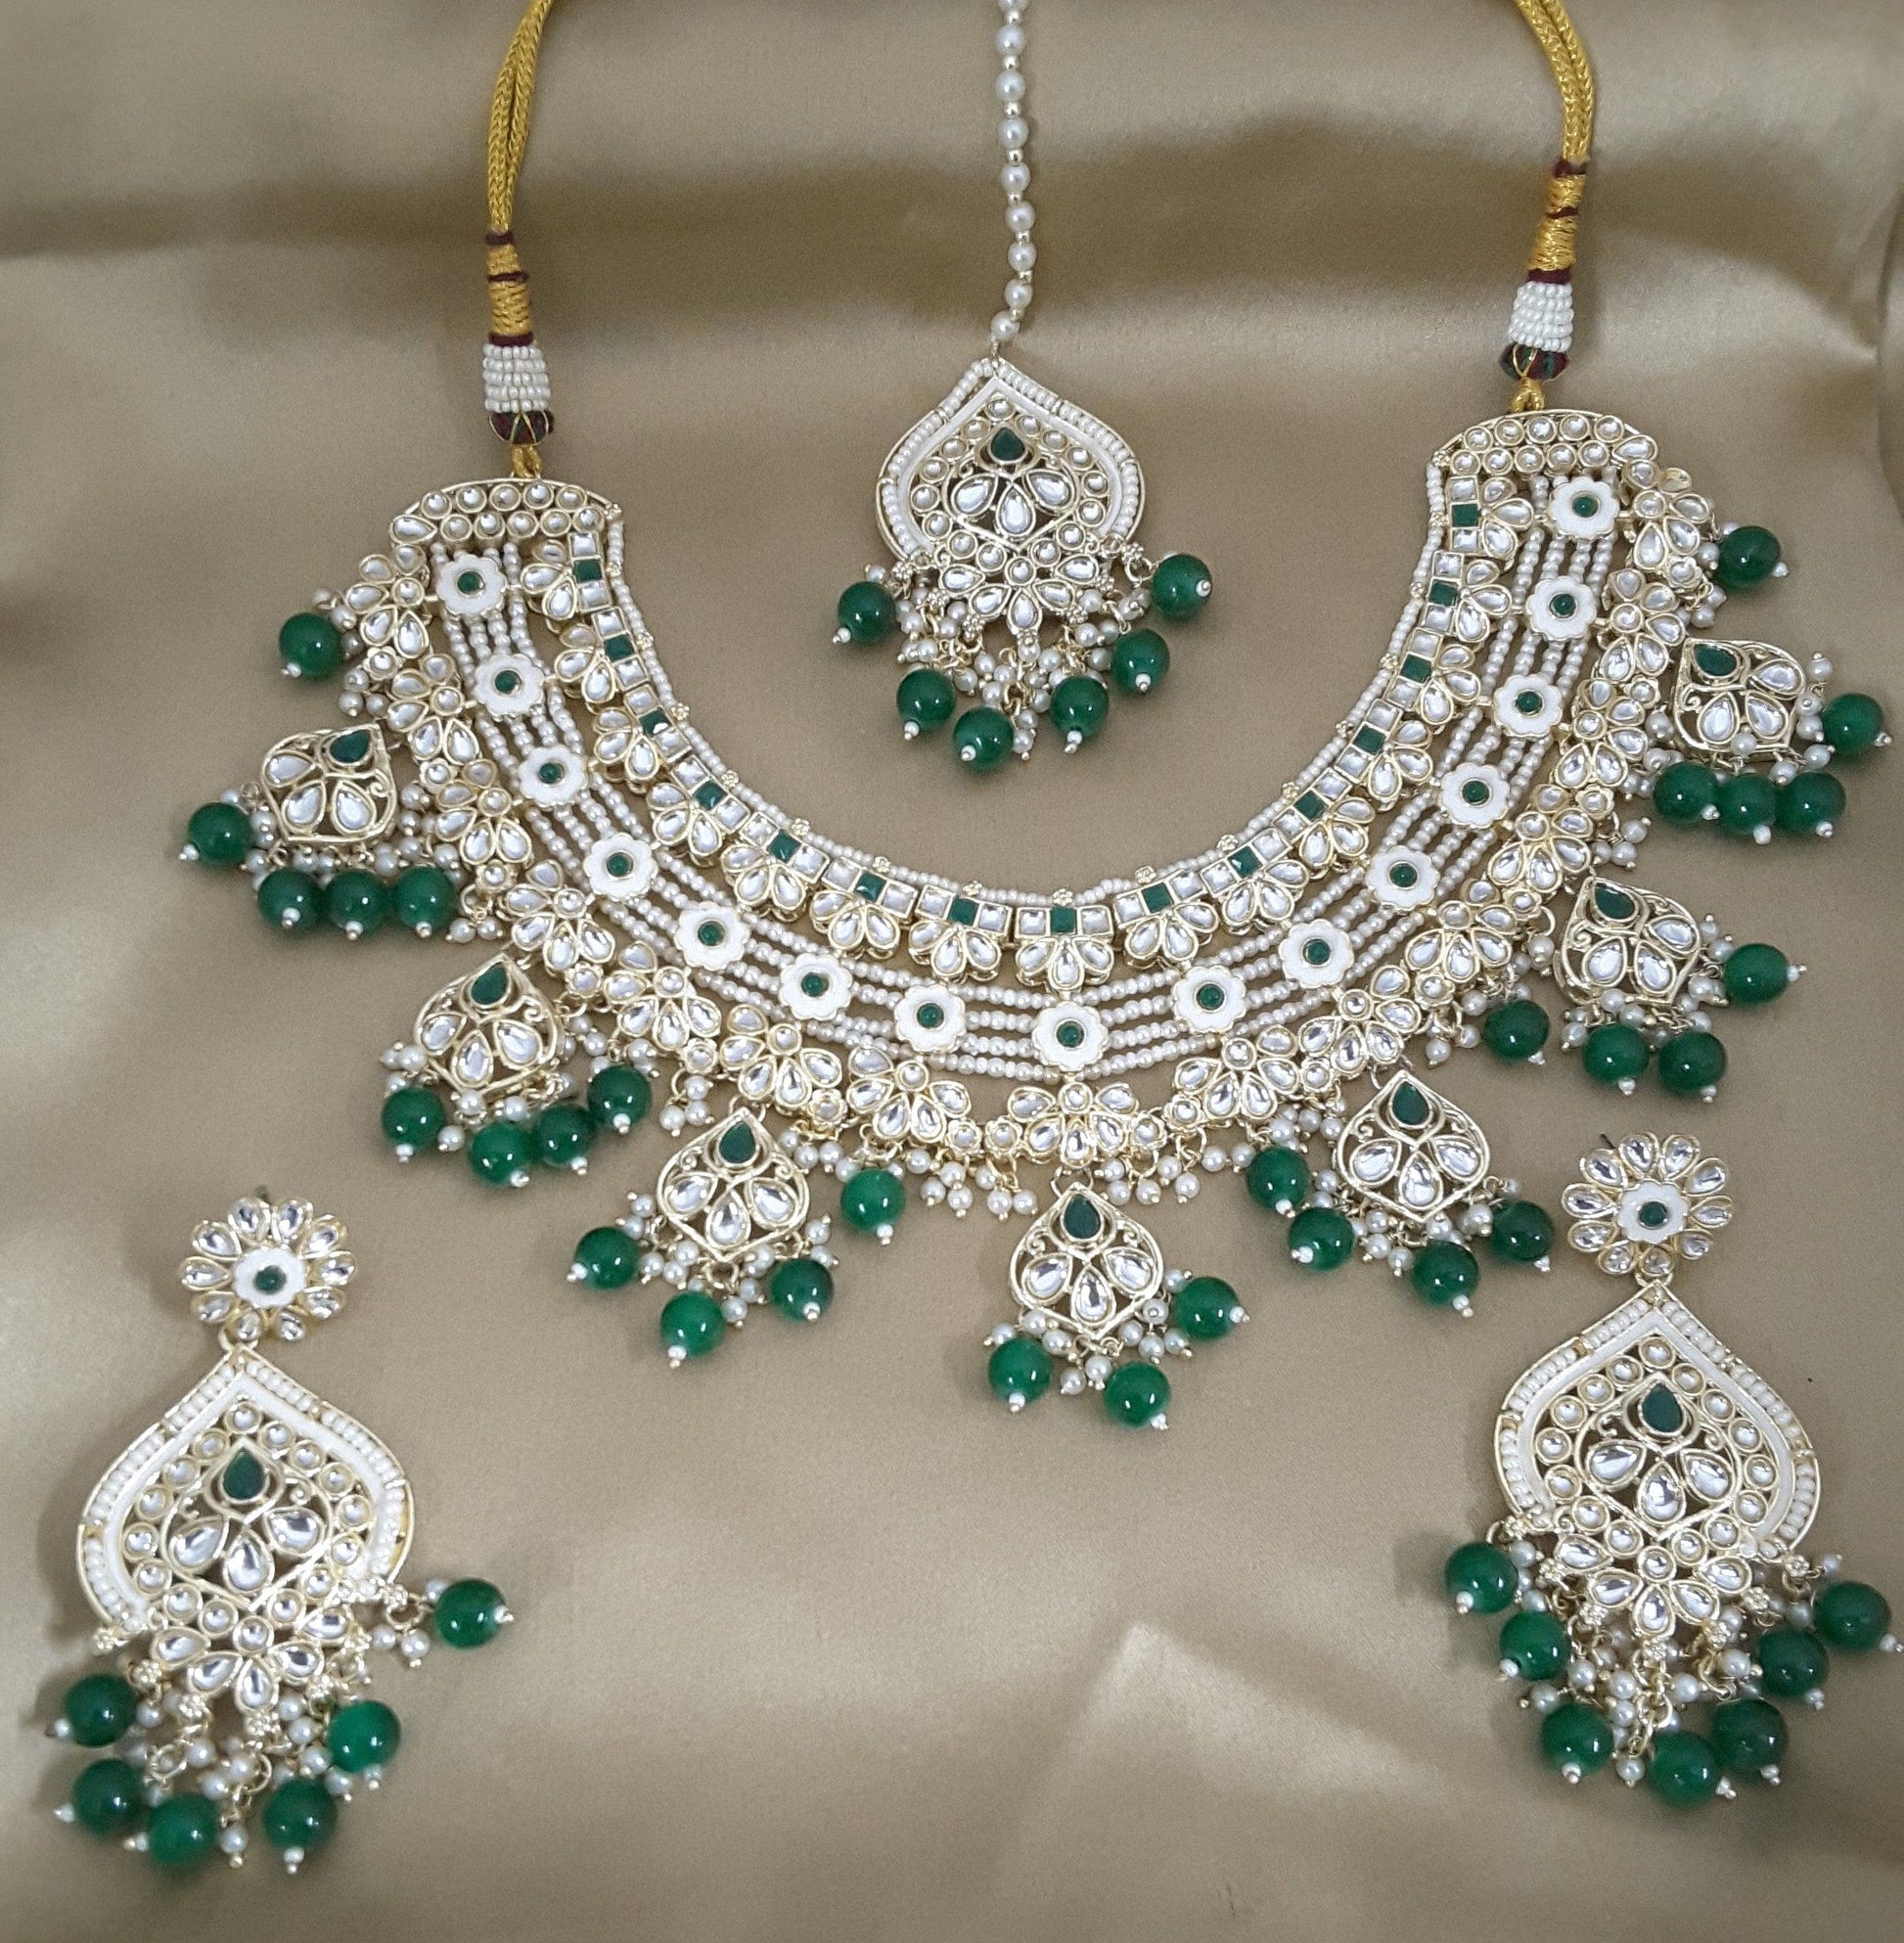 Moonstruck Traditional Indian Meenakari White Kundan and Emerald Green Beads Choker Necklace Earring Set with Maang tikka for Women(Emerald Green) - www.MoonstruckINC.com